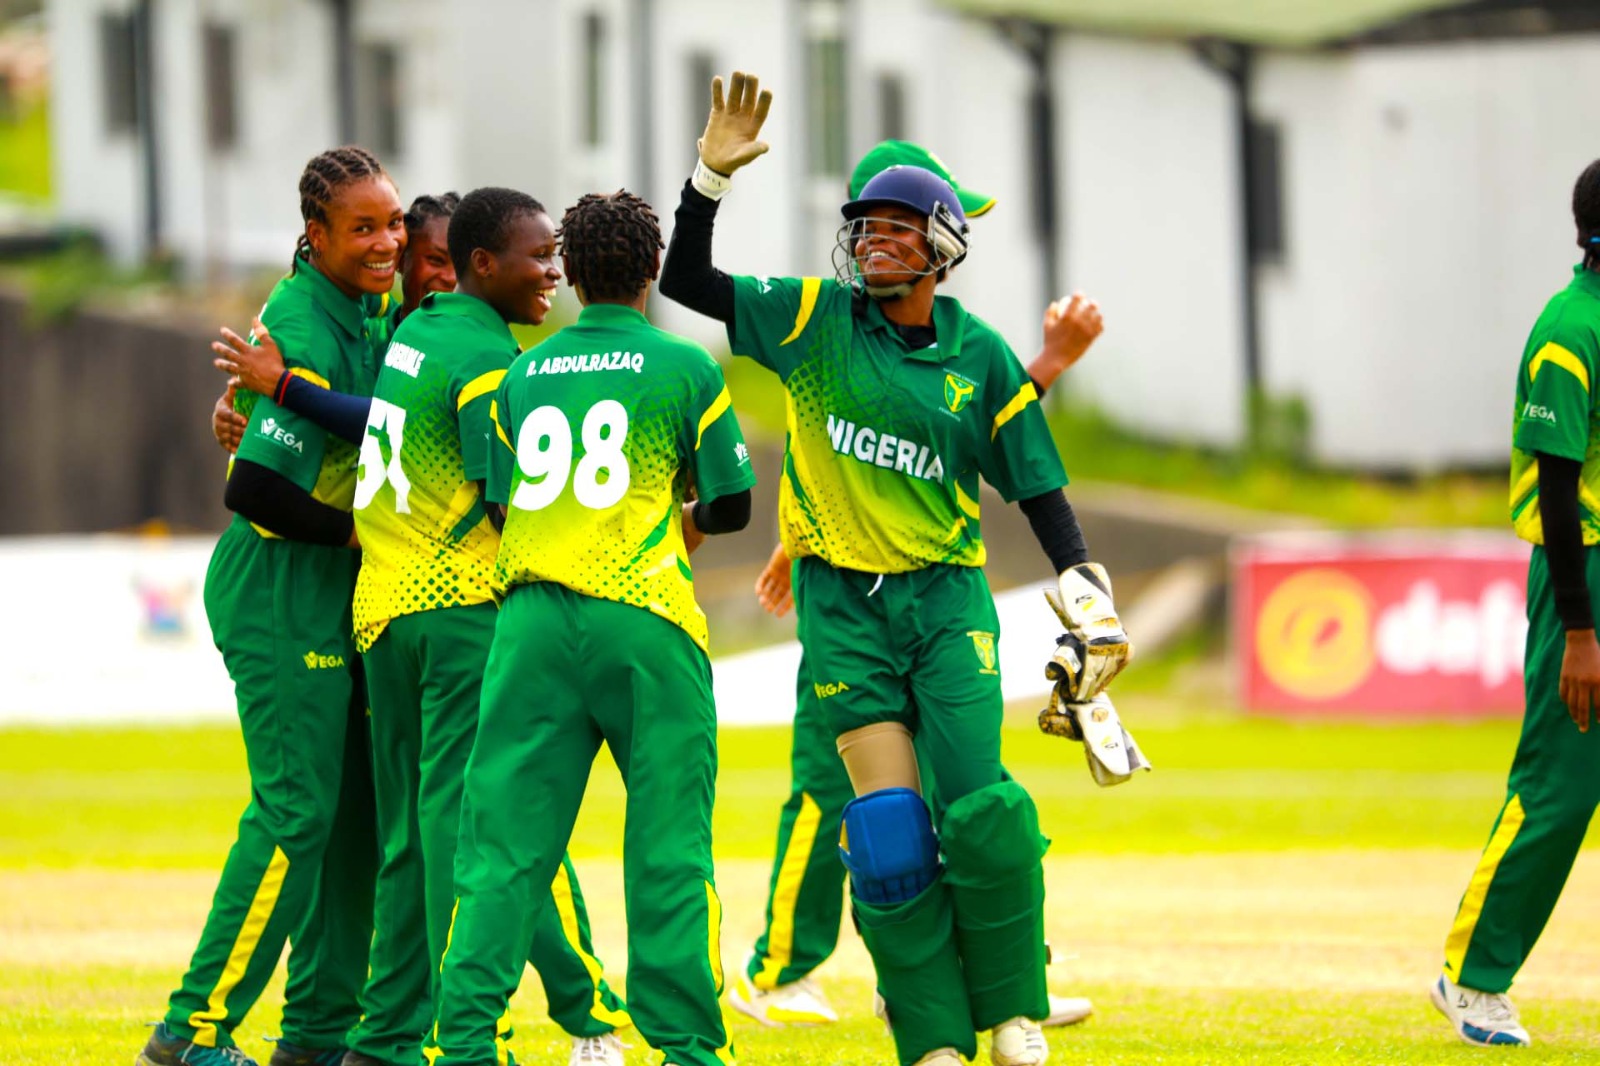 Nigeria beats Rwanda in women's T20i cricket second round